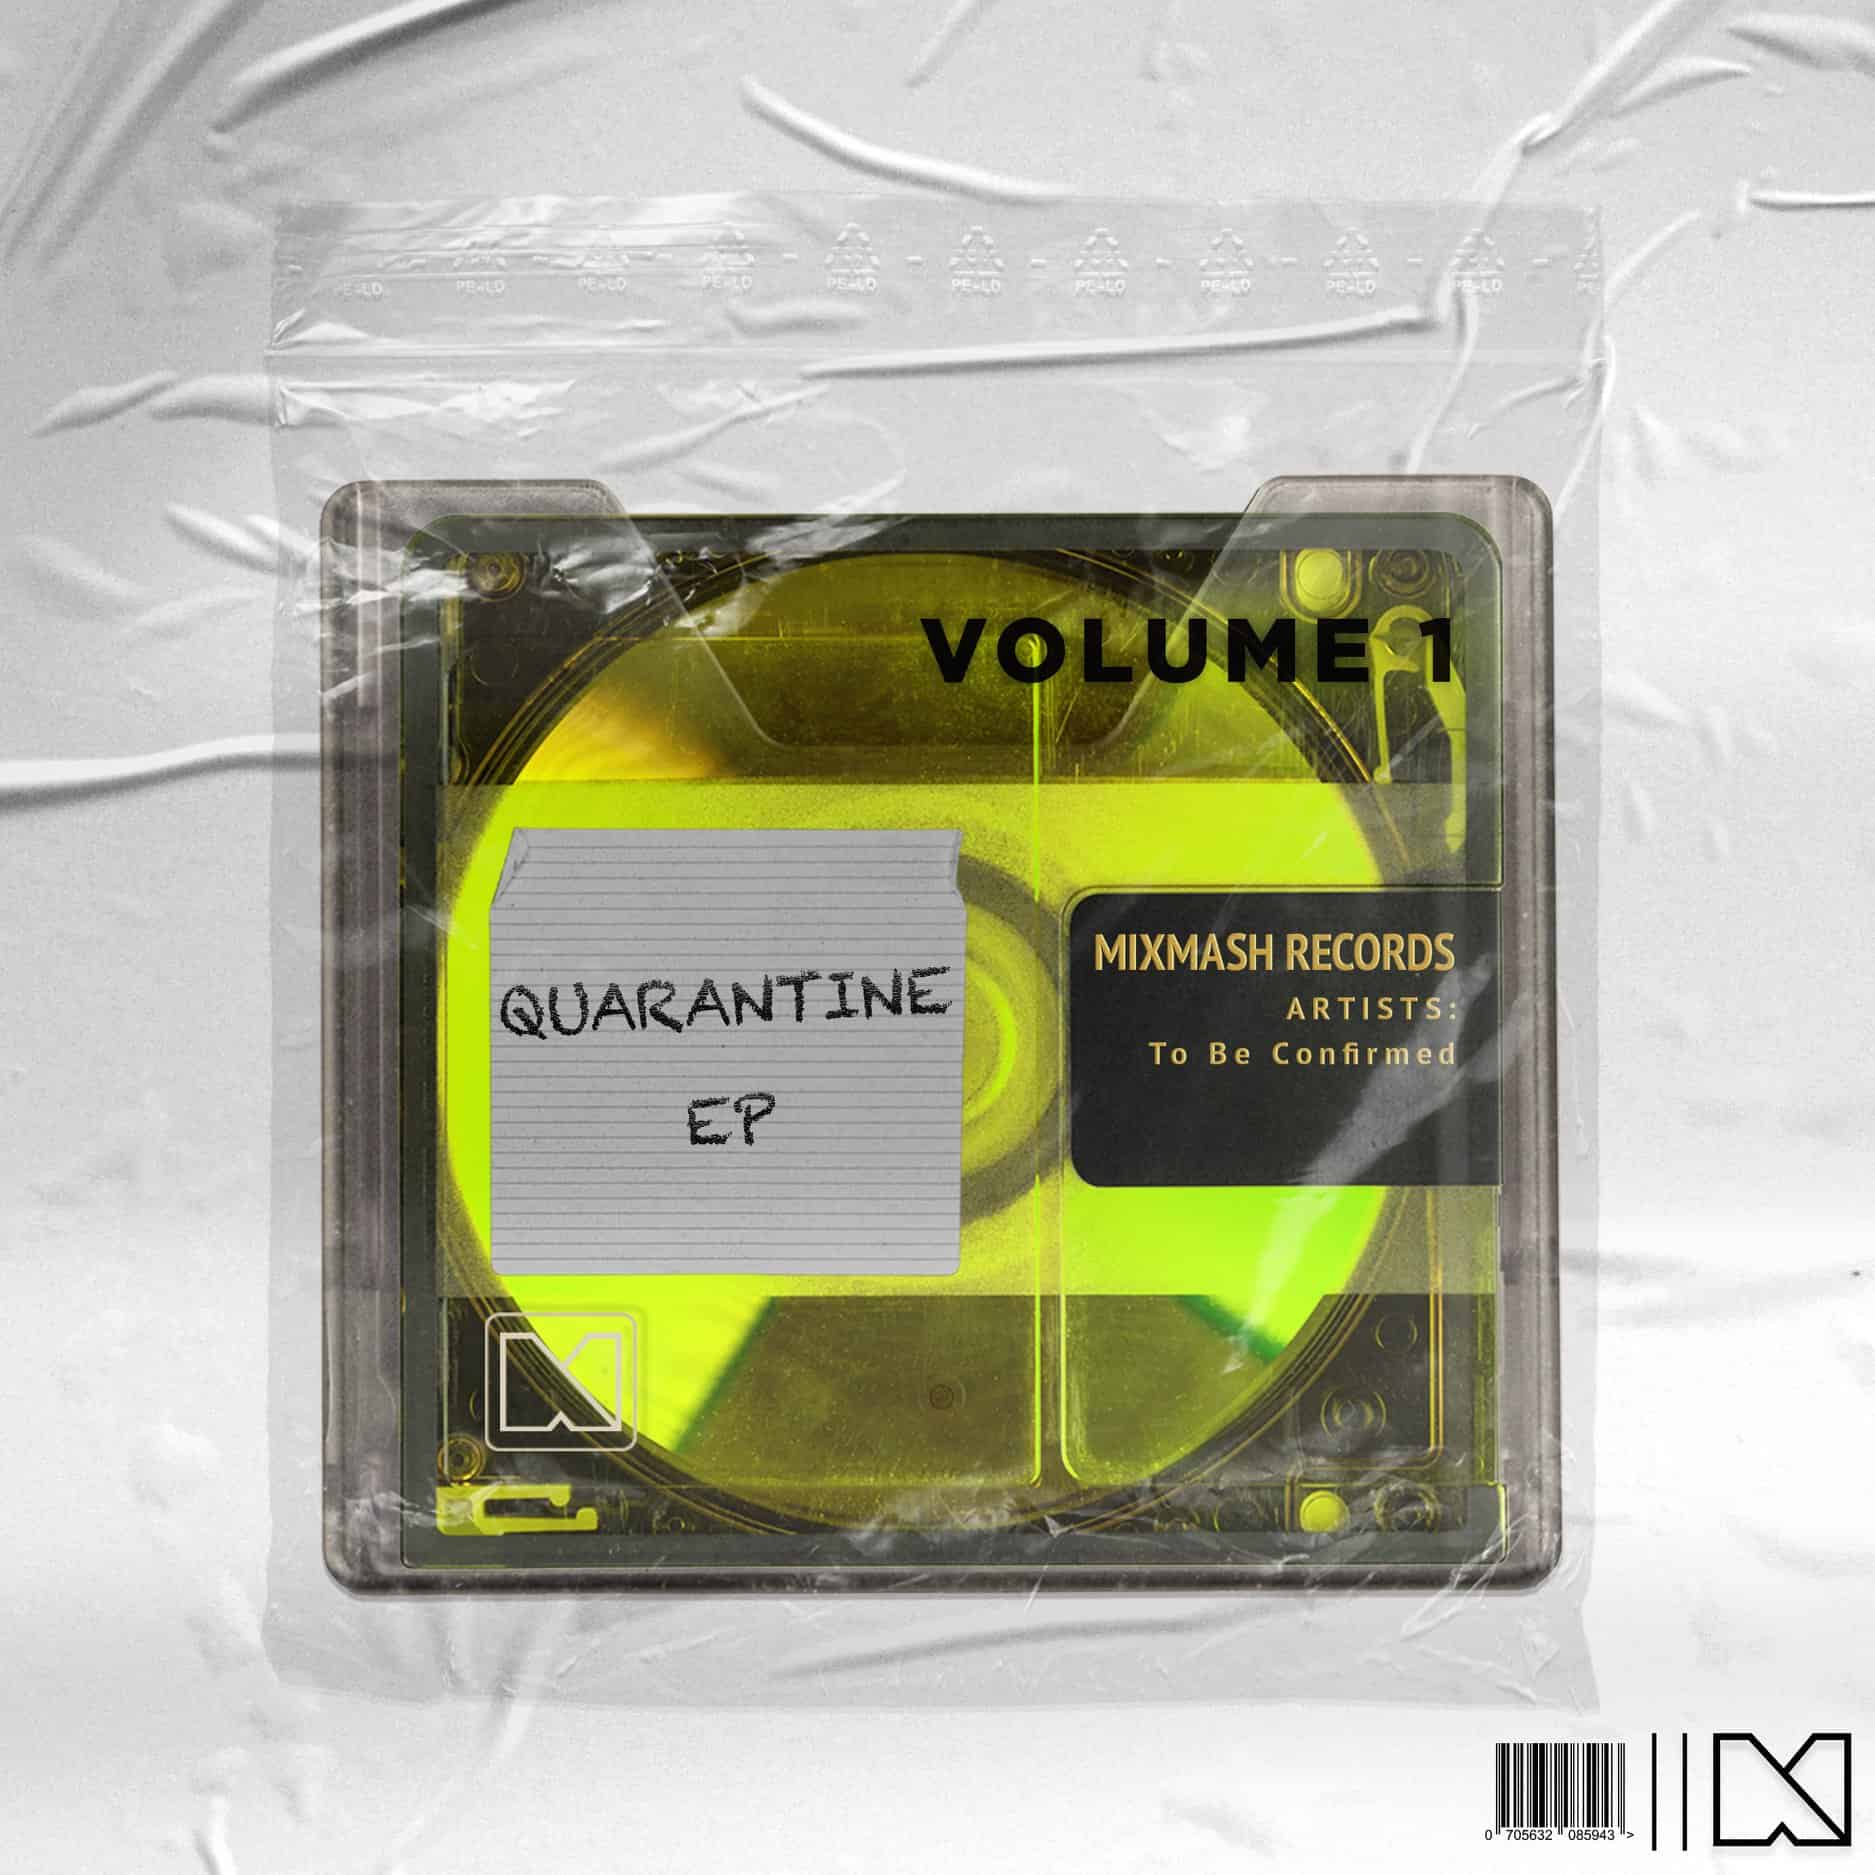 Laidback Luke’s Mixmash Records imprint presents The Quarantine Series